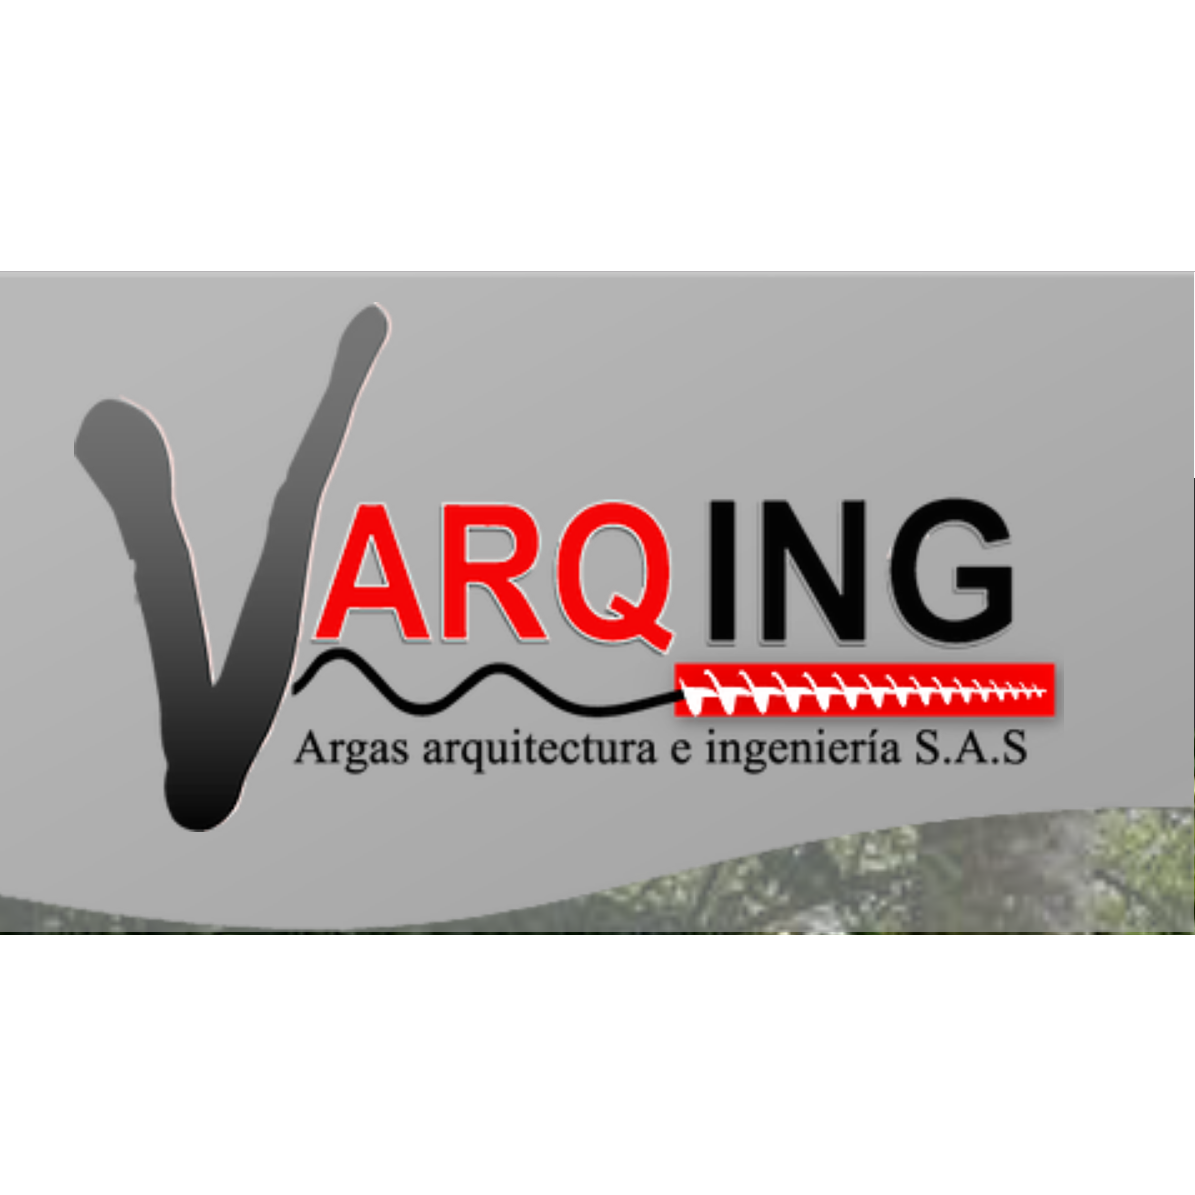 Vargas Arquitectura e Ingeniería - Varqing S.A. Cartagena